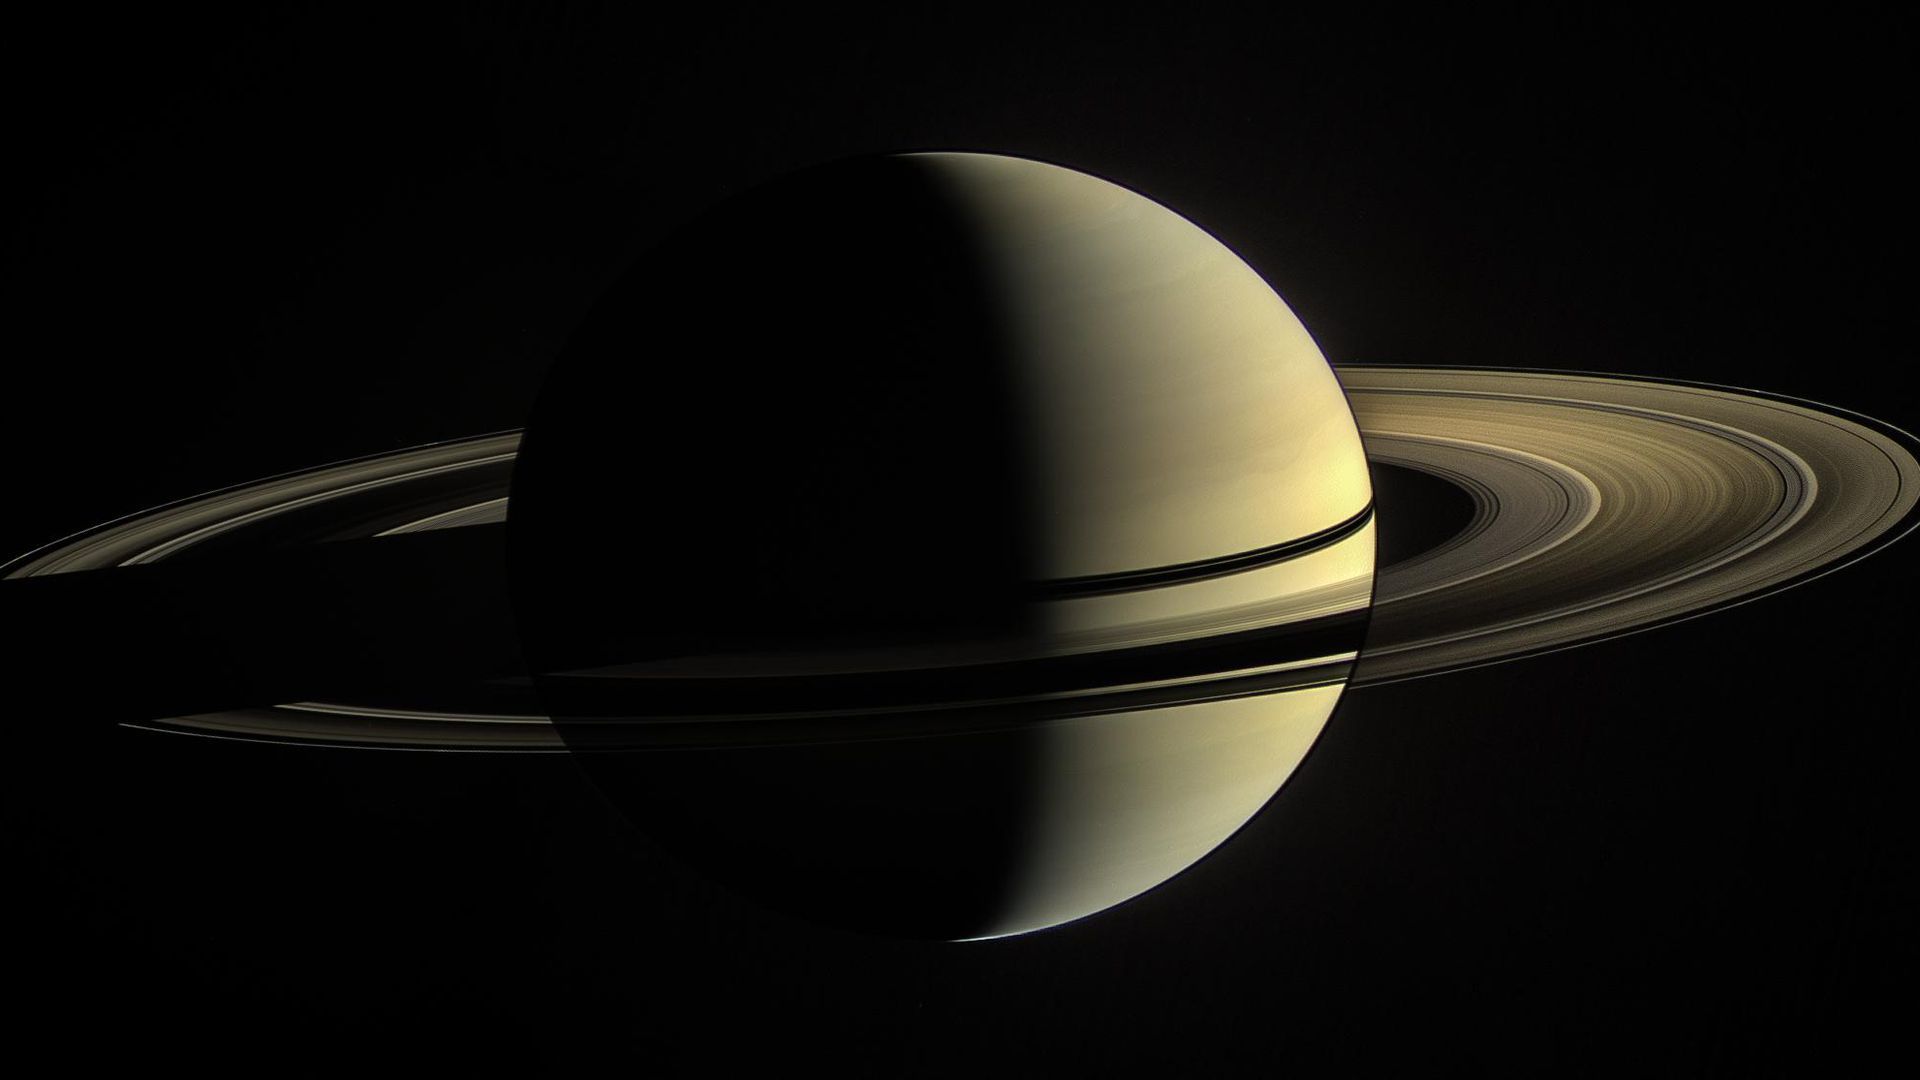 Image of Saturn.